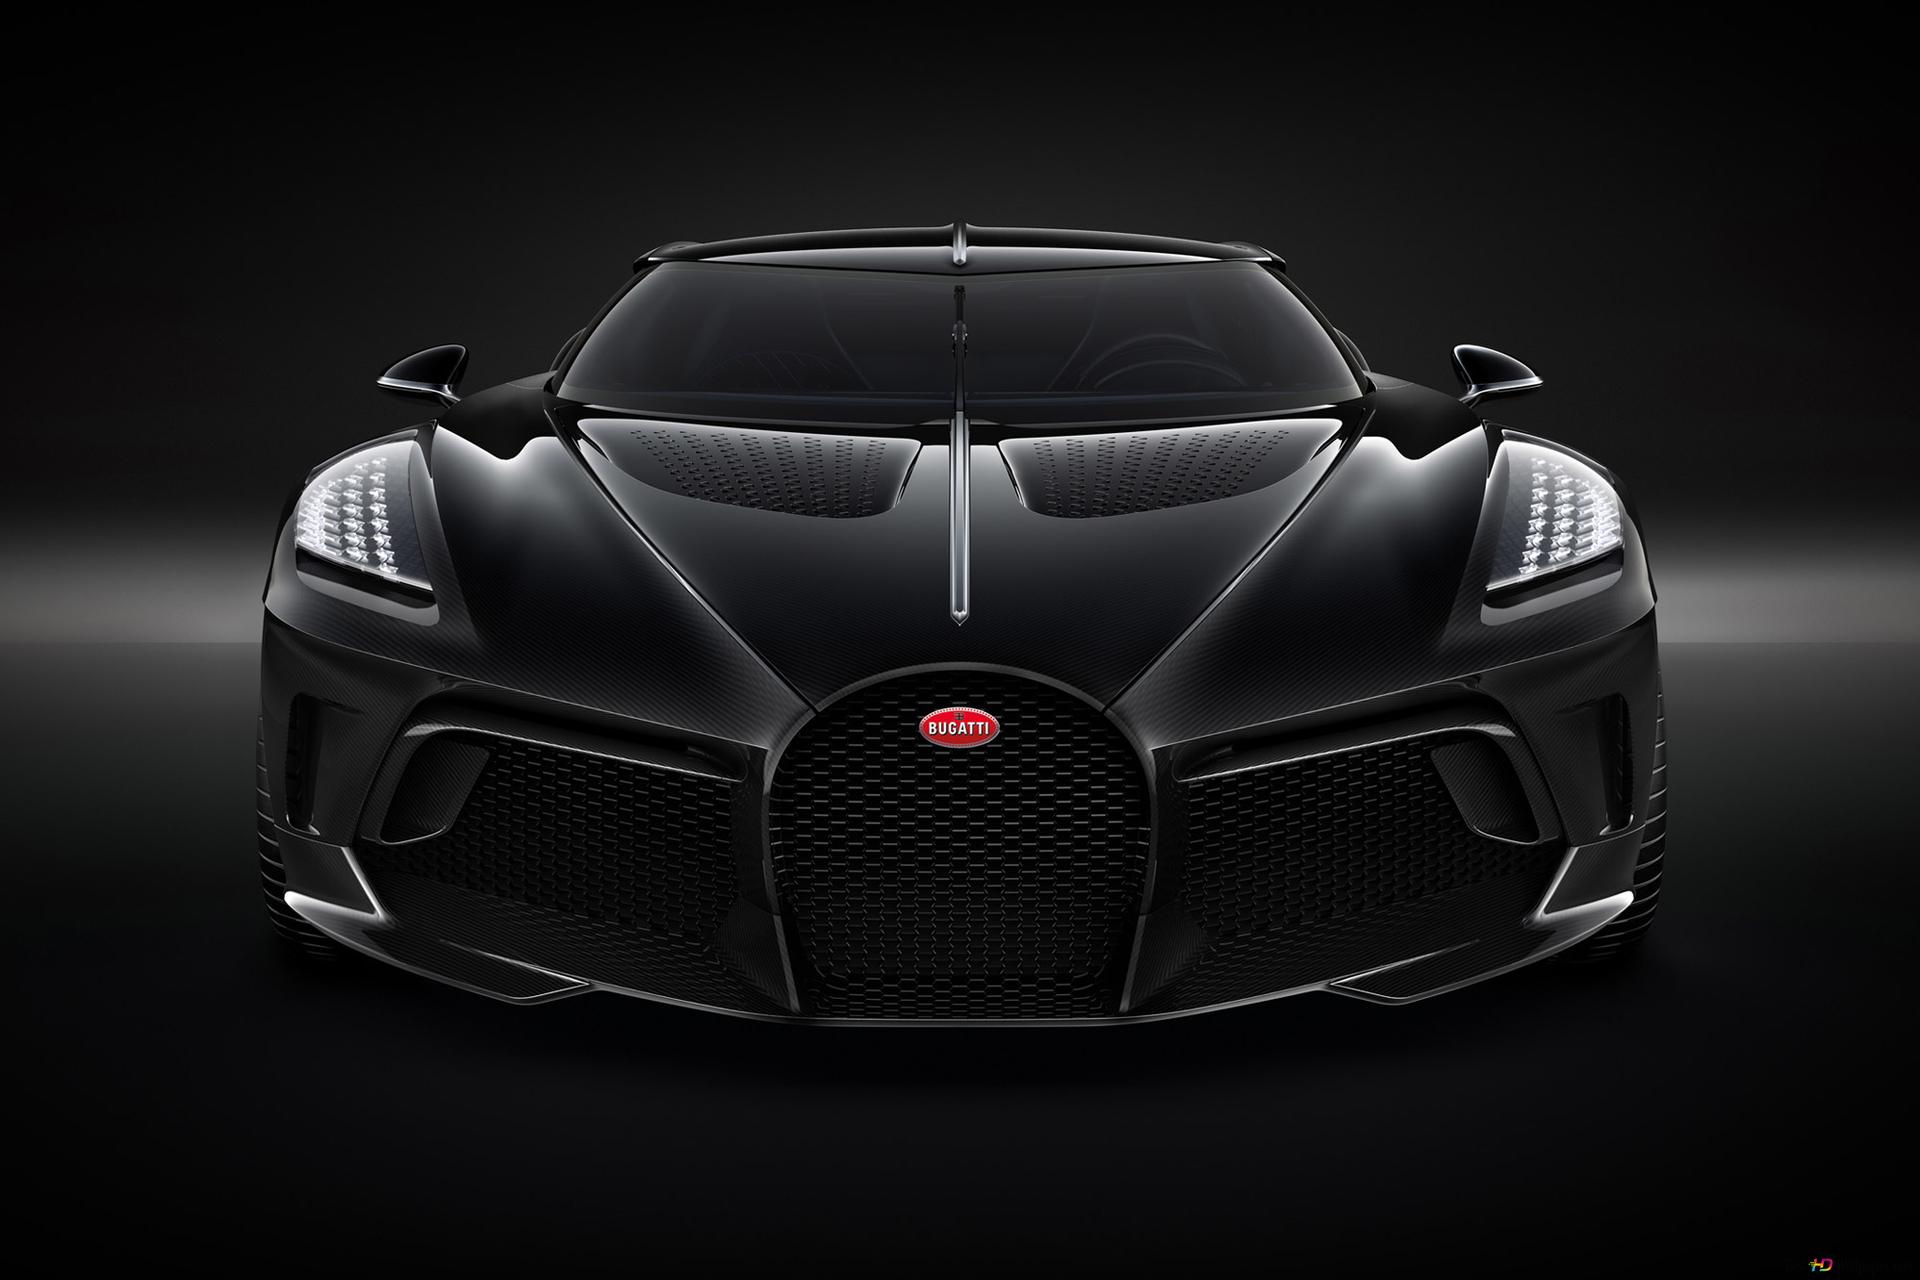 Its a speed monster bugatti la voiture noire k wallpaper download